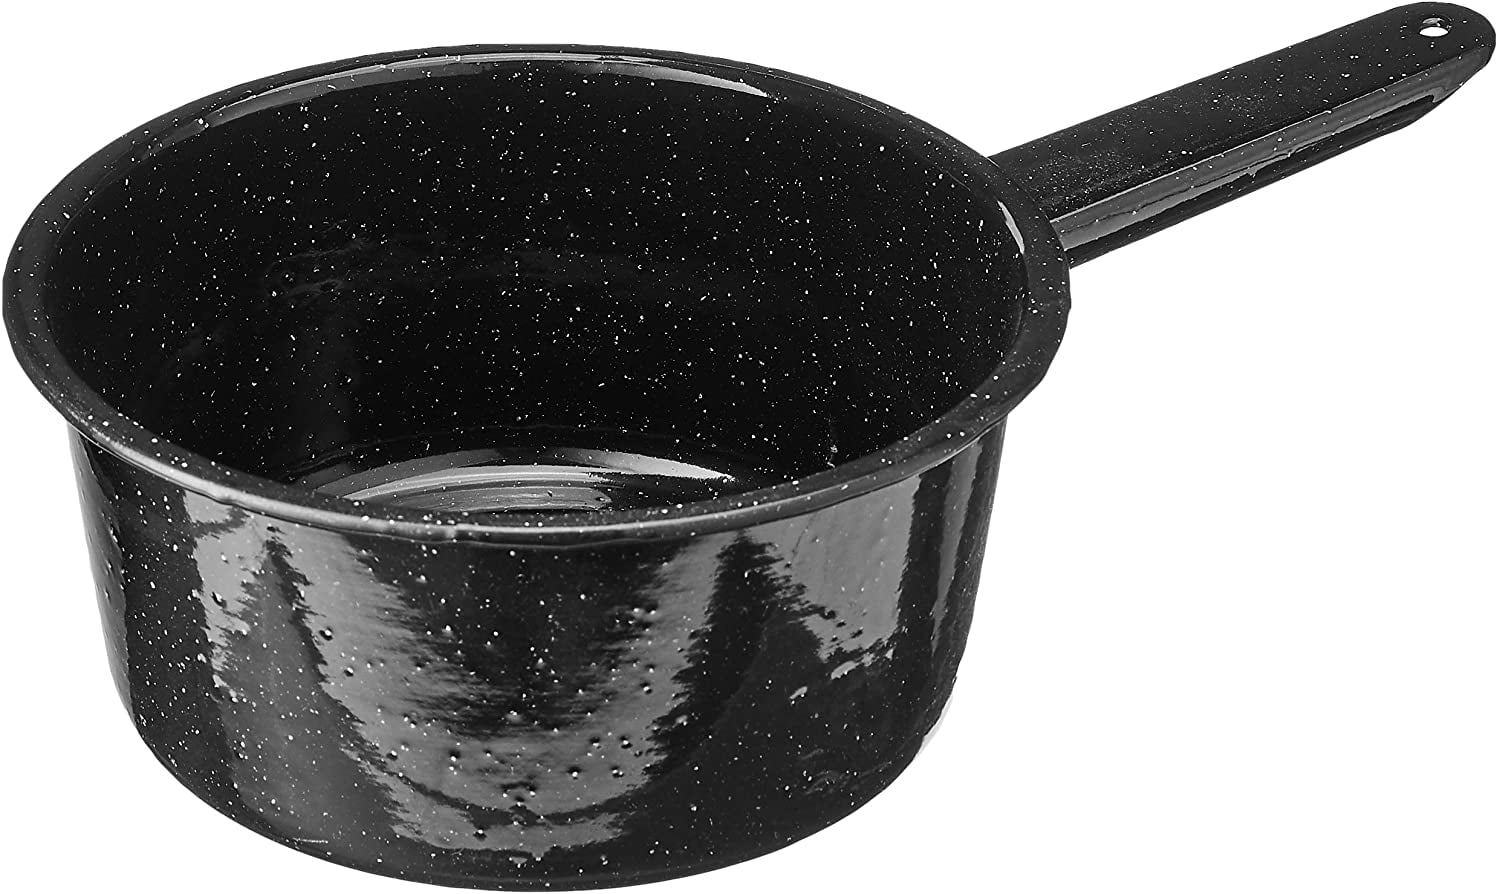 Black Cast Iron Enamel Cookware Set - Salamander Stoves